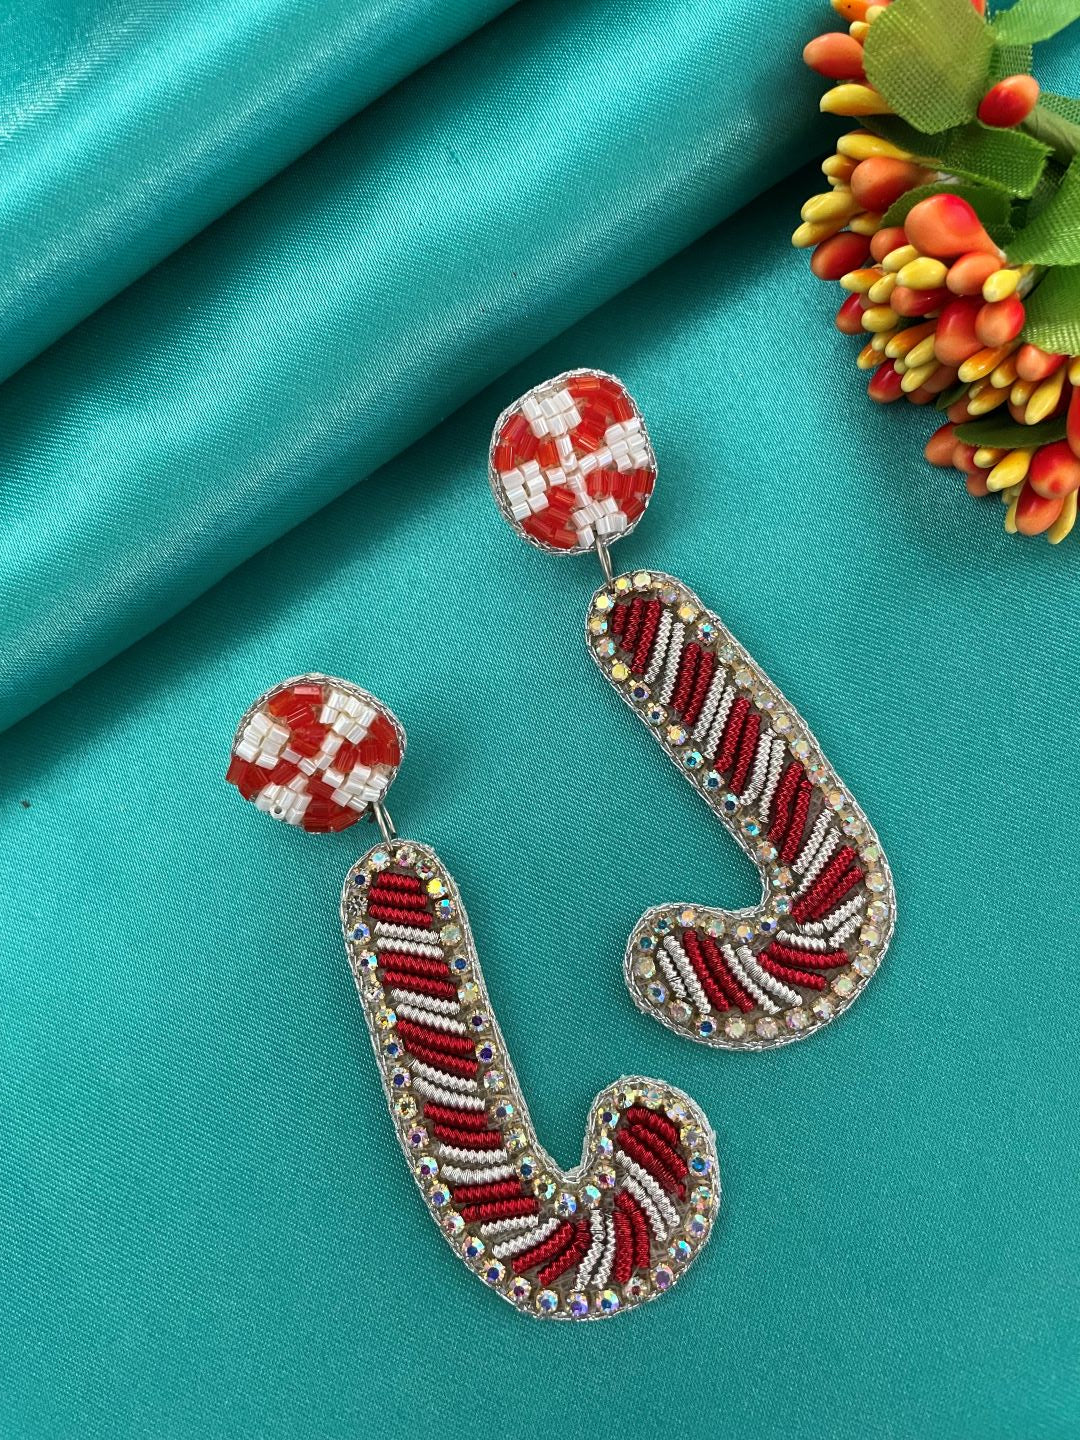 image for Christmas CandyCane Beaded Earrings